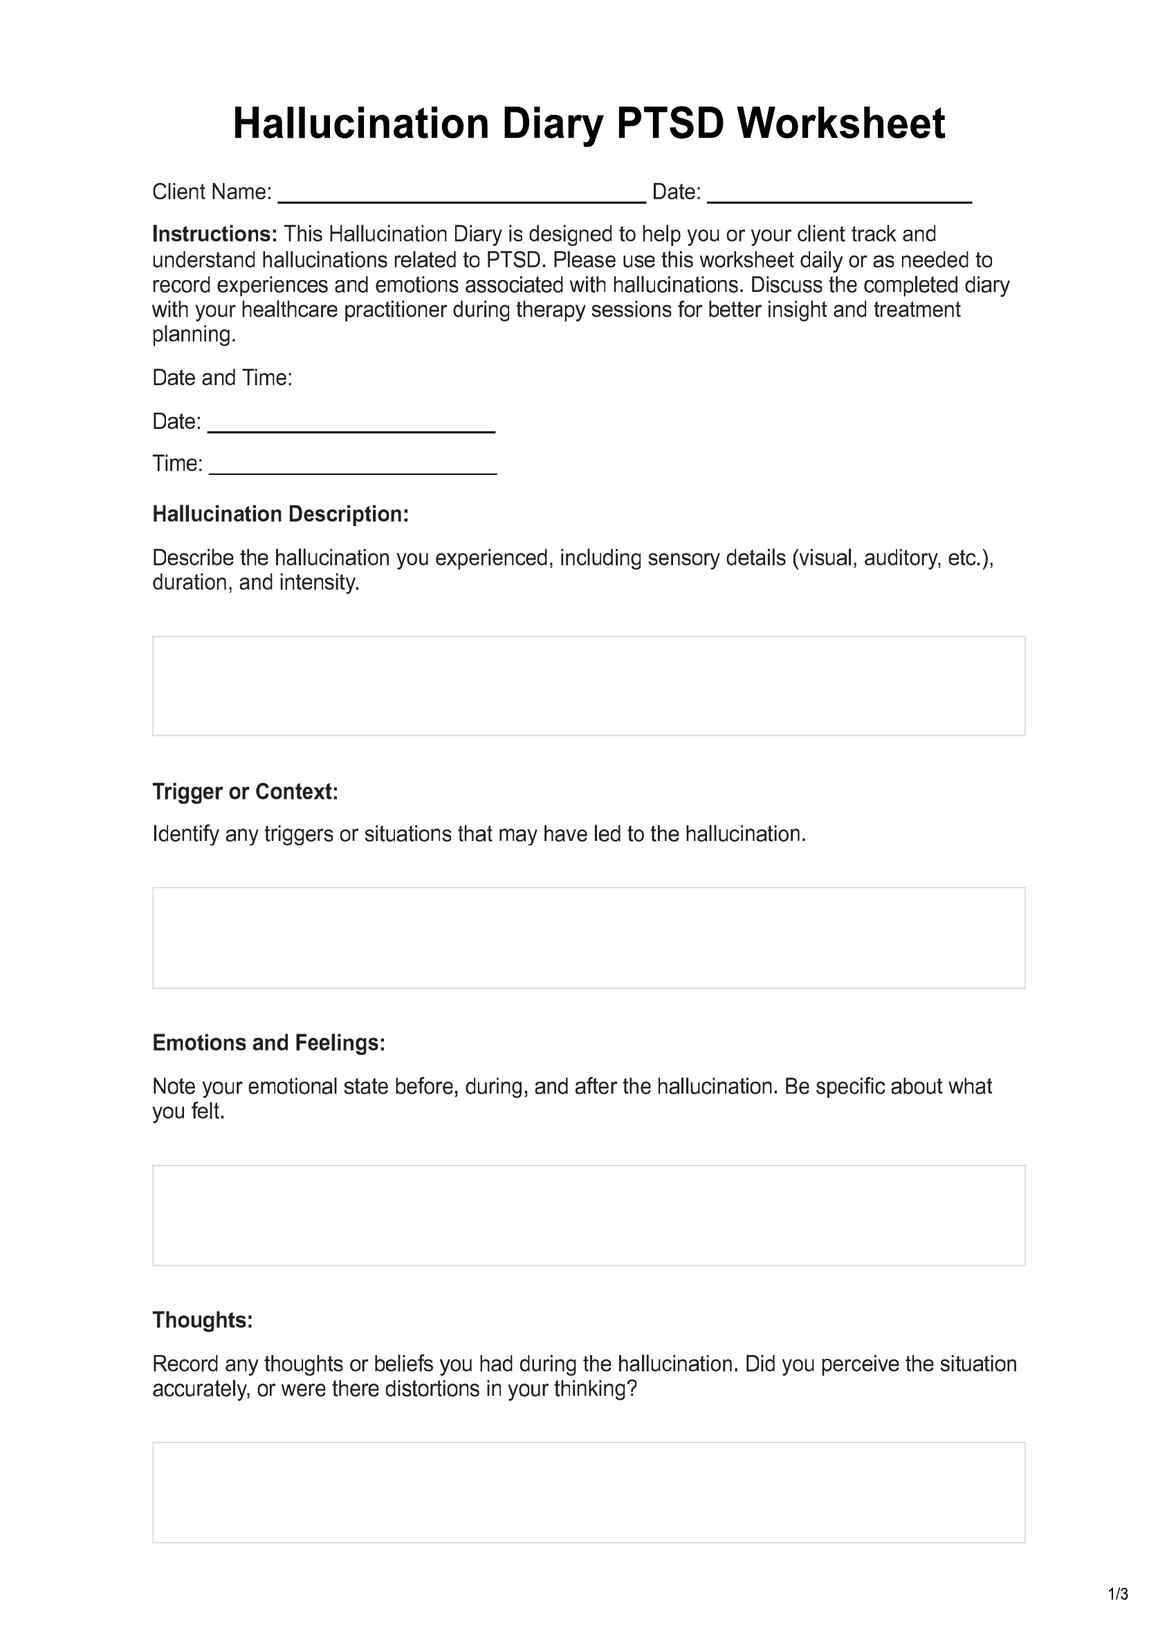 Hallucination Diary PTSD Worksheet PDF Example